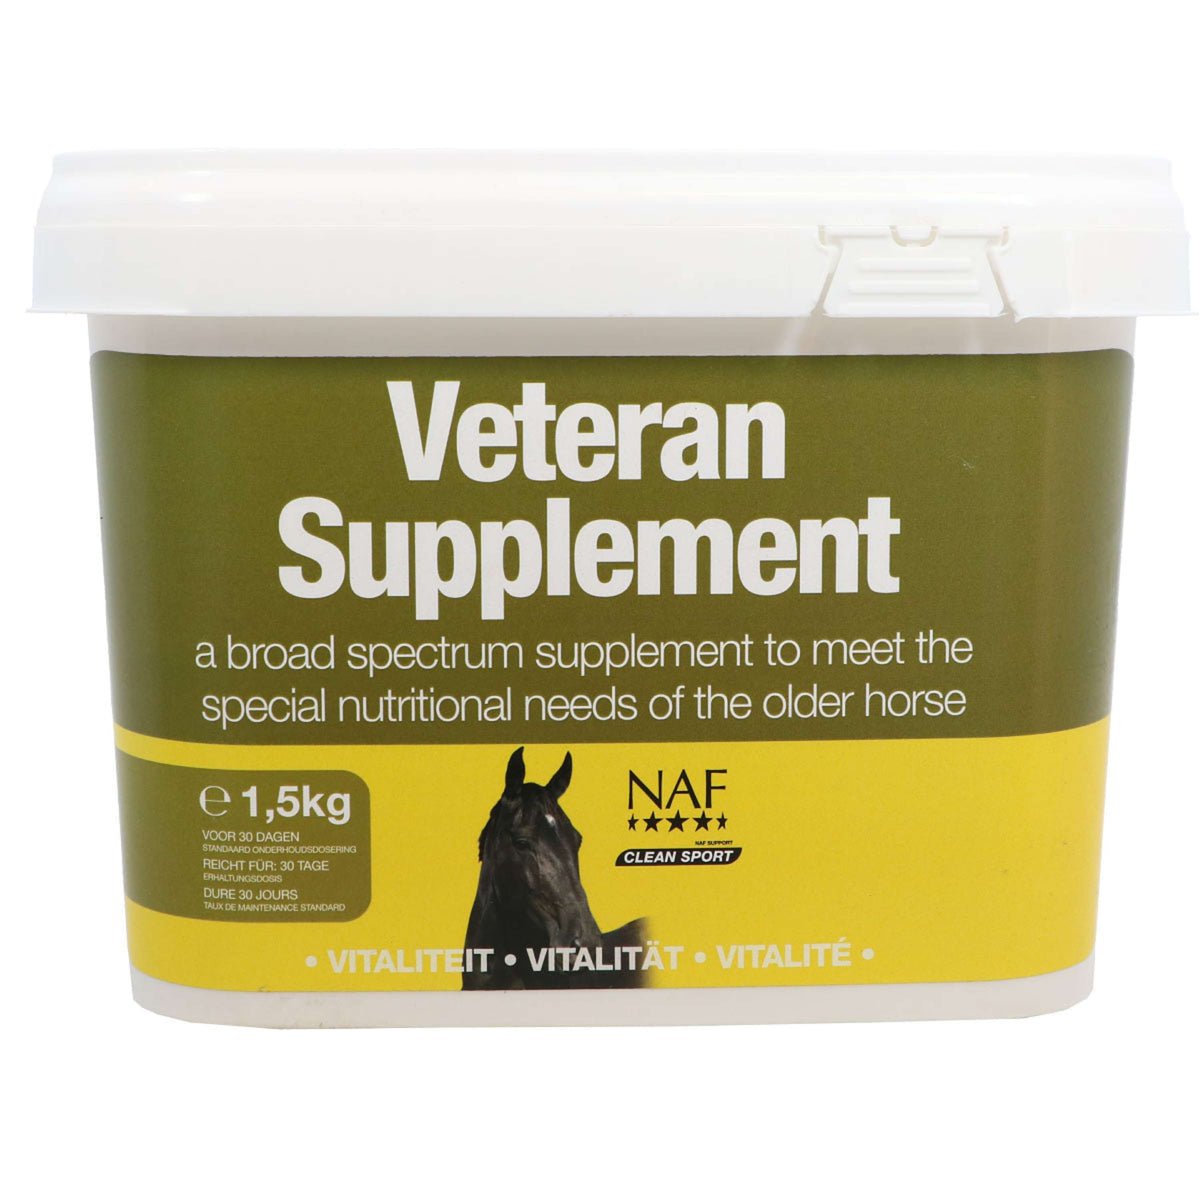 NAF Veteran Supplement